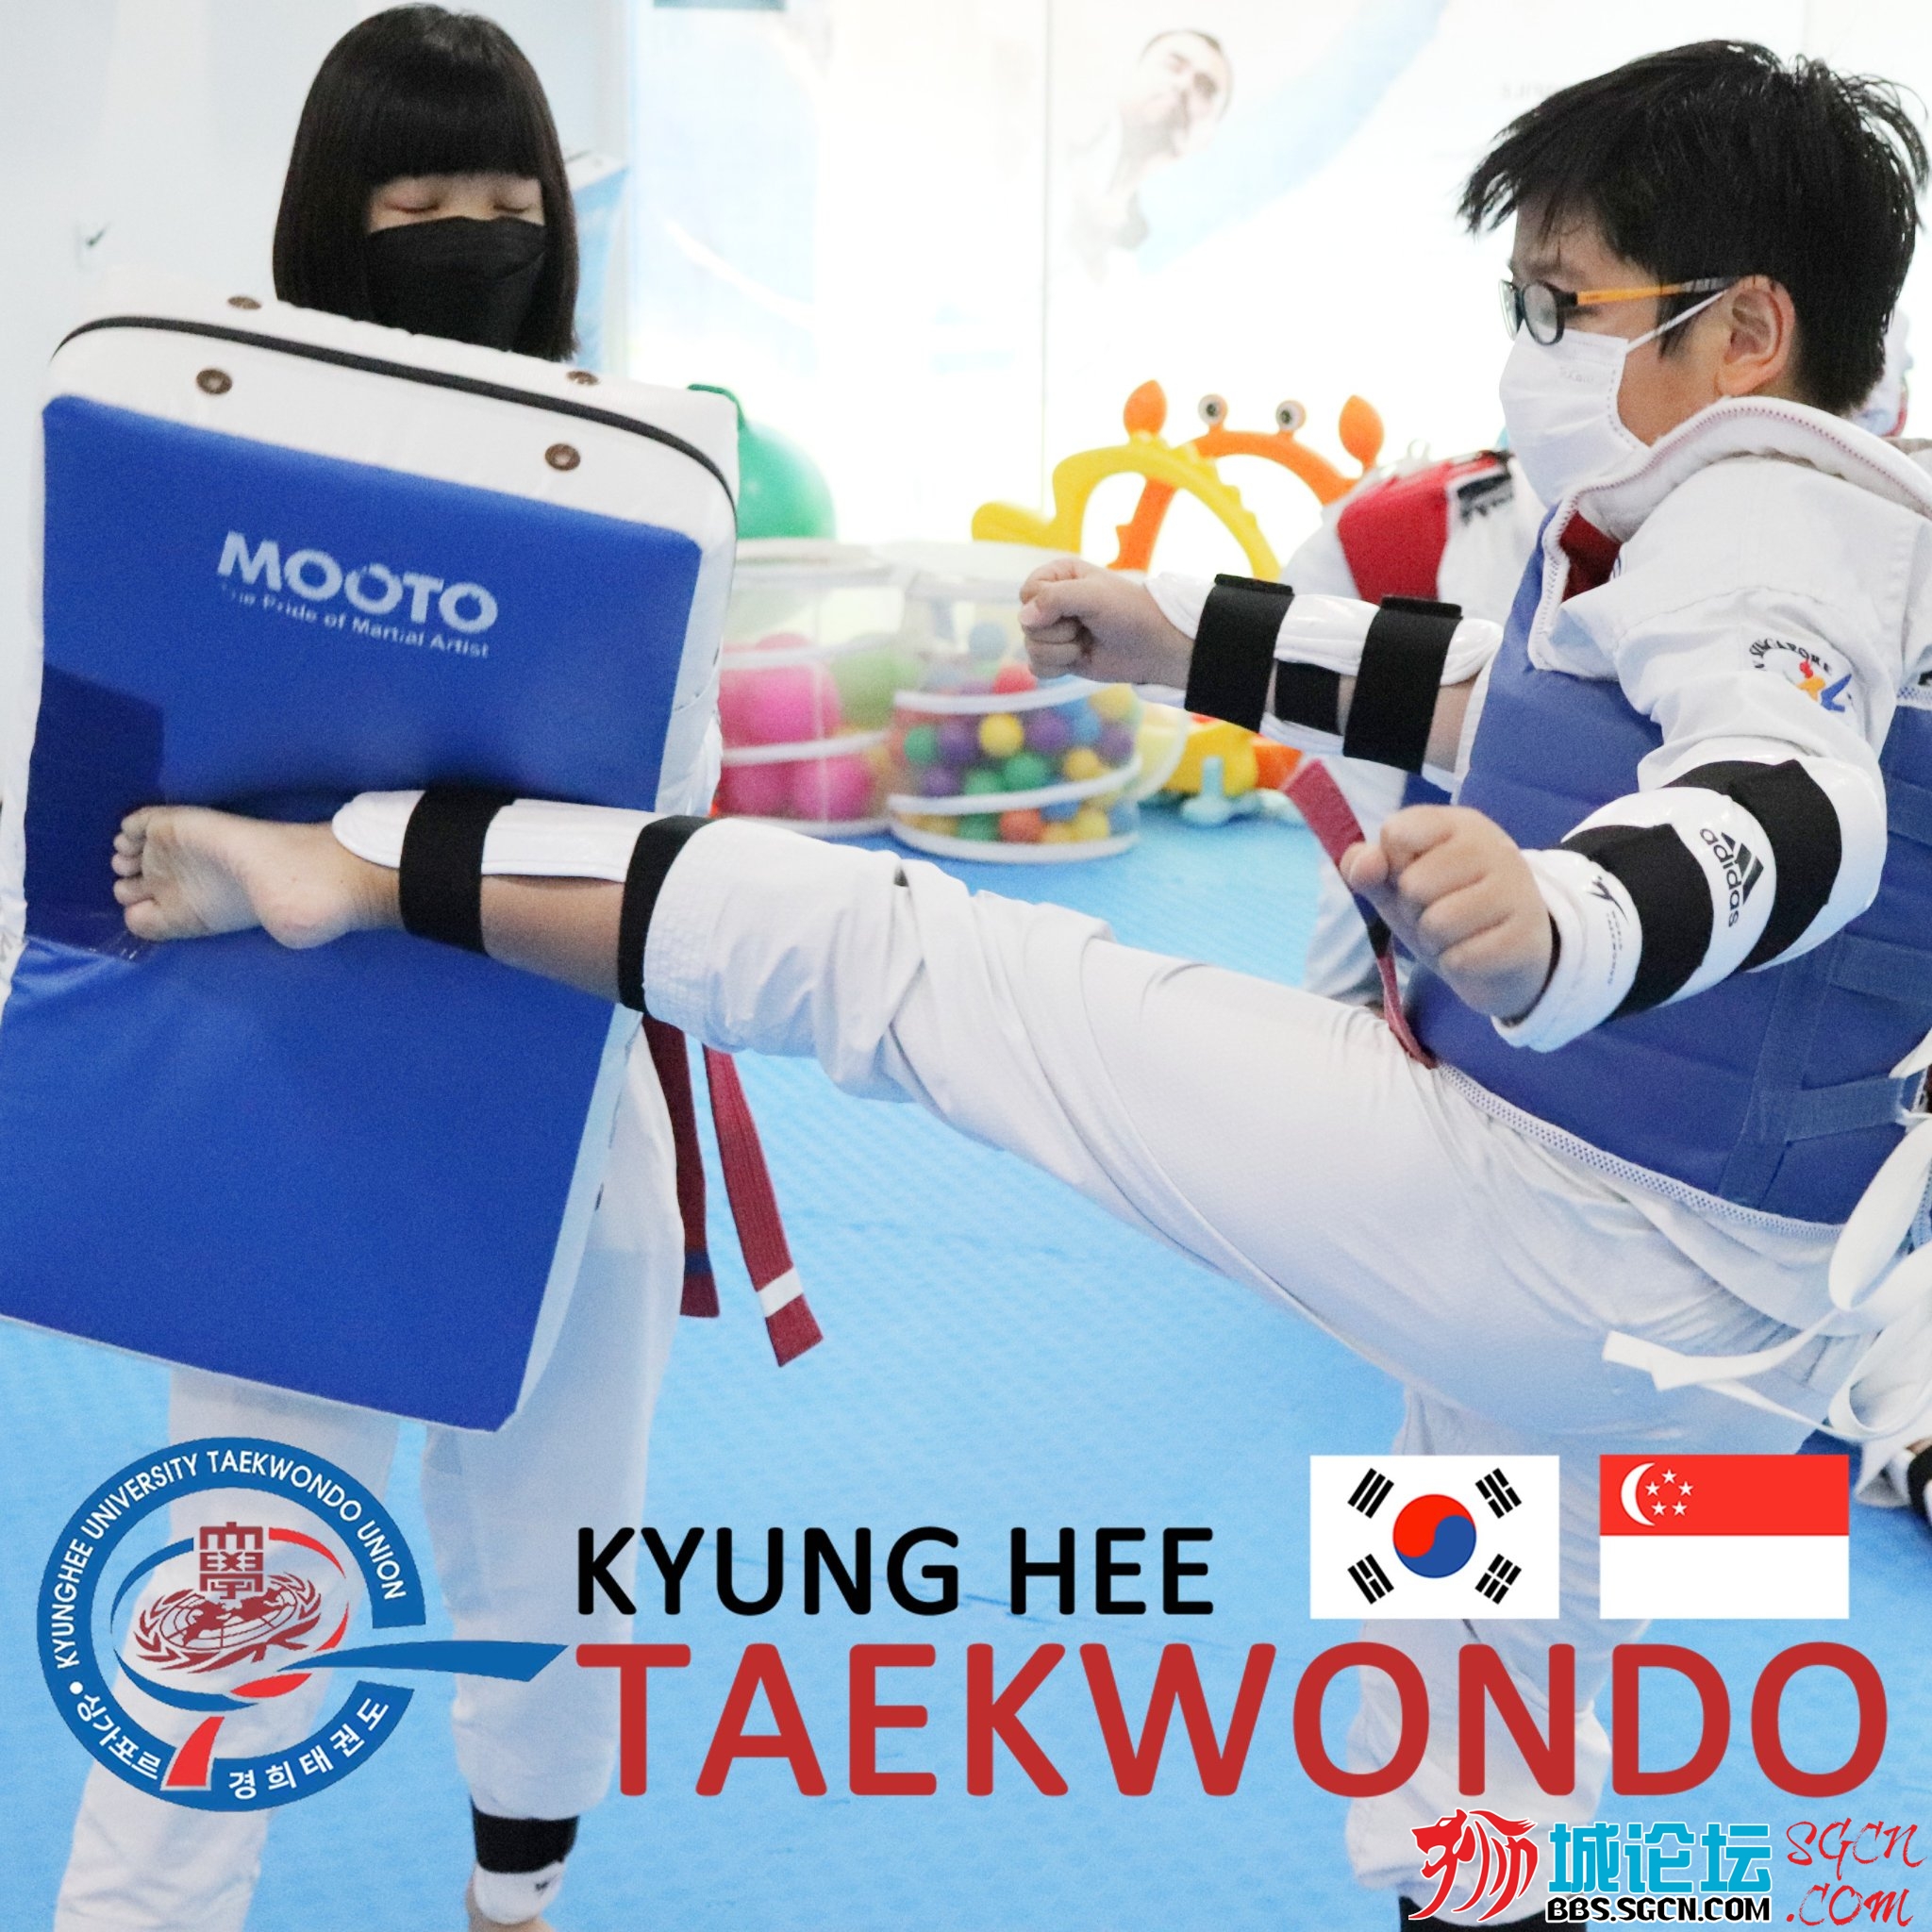 Kyunghee Taekwondo_kicking1.jpg